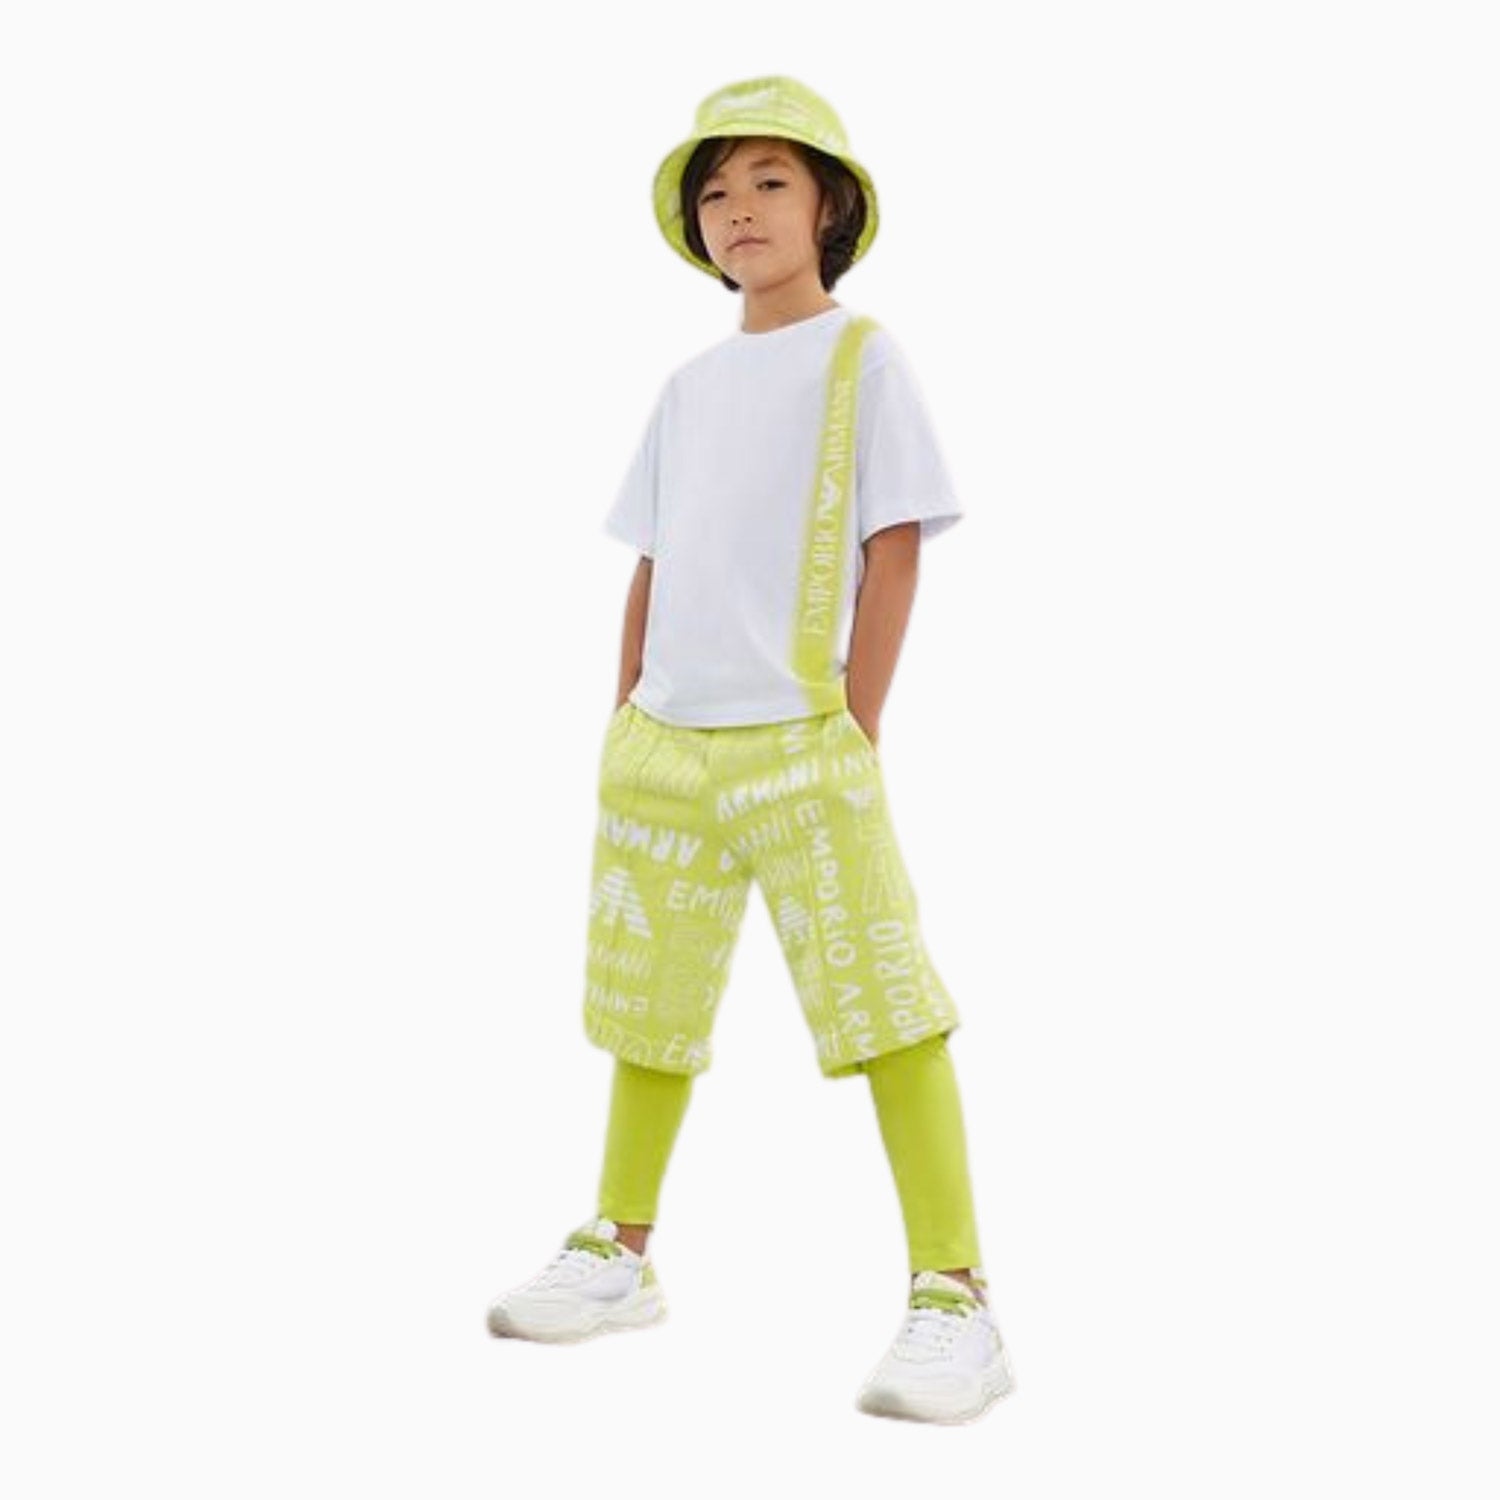 emporio-armani-kids-gradient-logo-jersey-t-shirt-and-shorts-outfit-3r4tja-4j5uz-01a3-3r4sja-4j5tz-f205